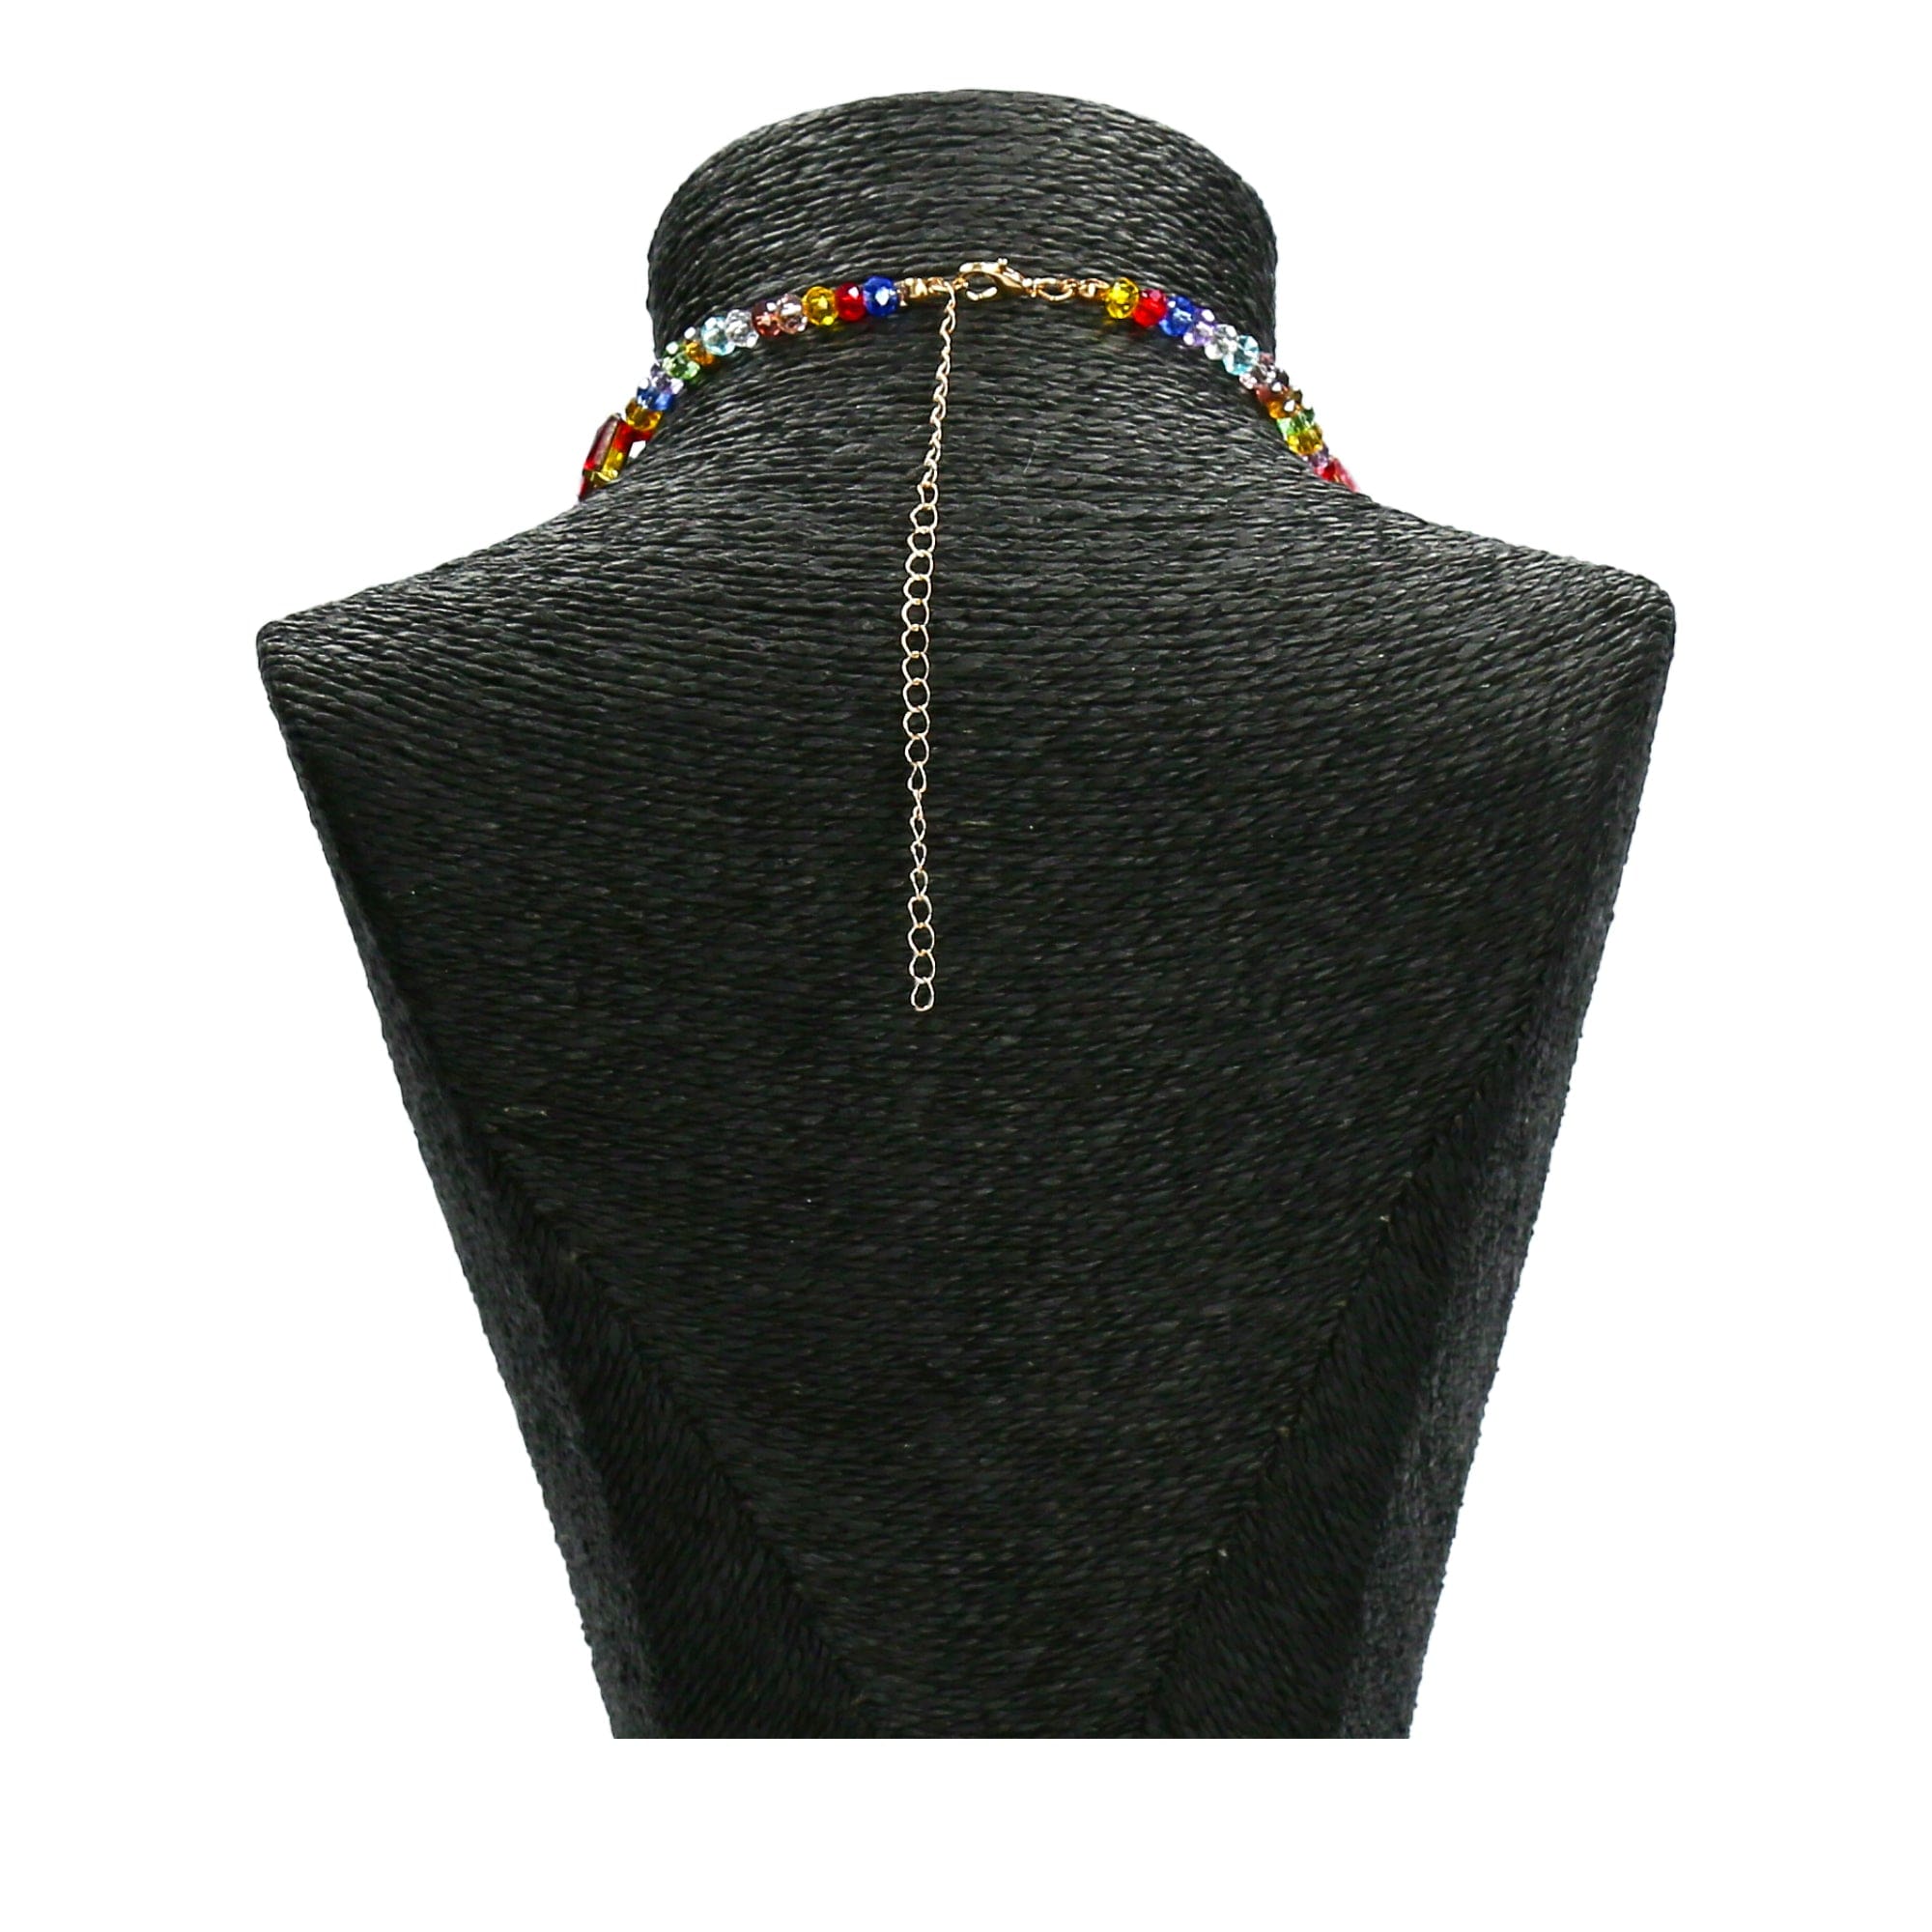 Bianca jewel necklace - Necklace